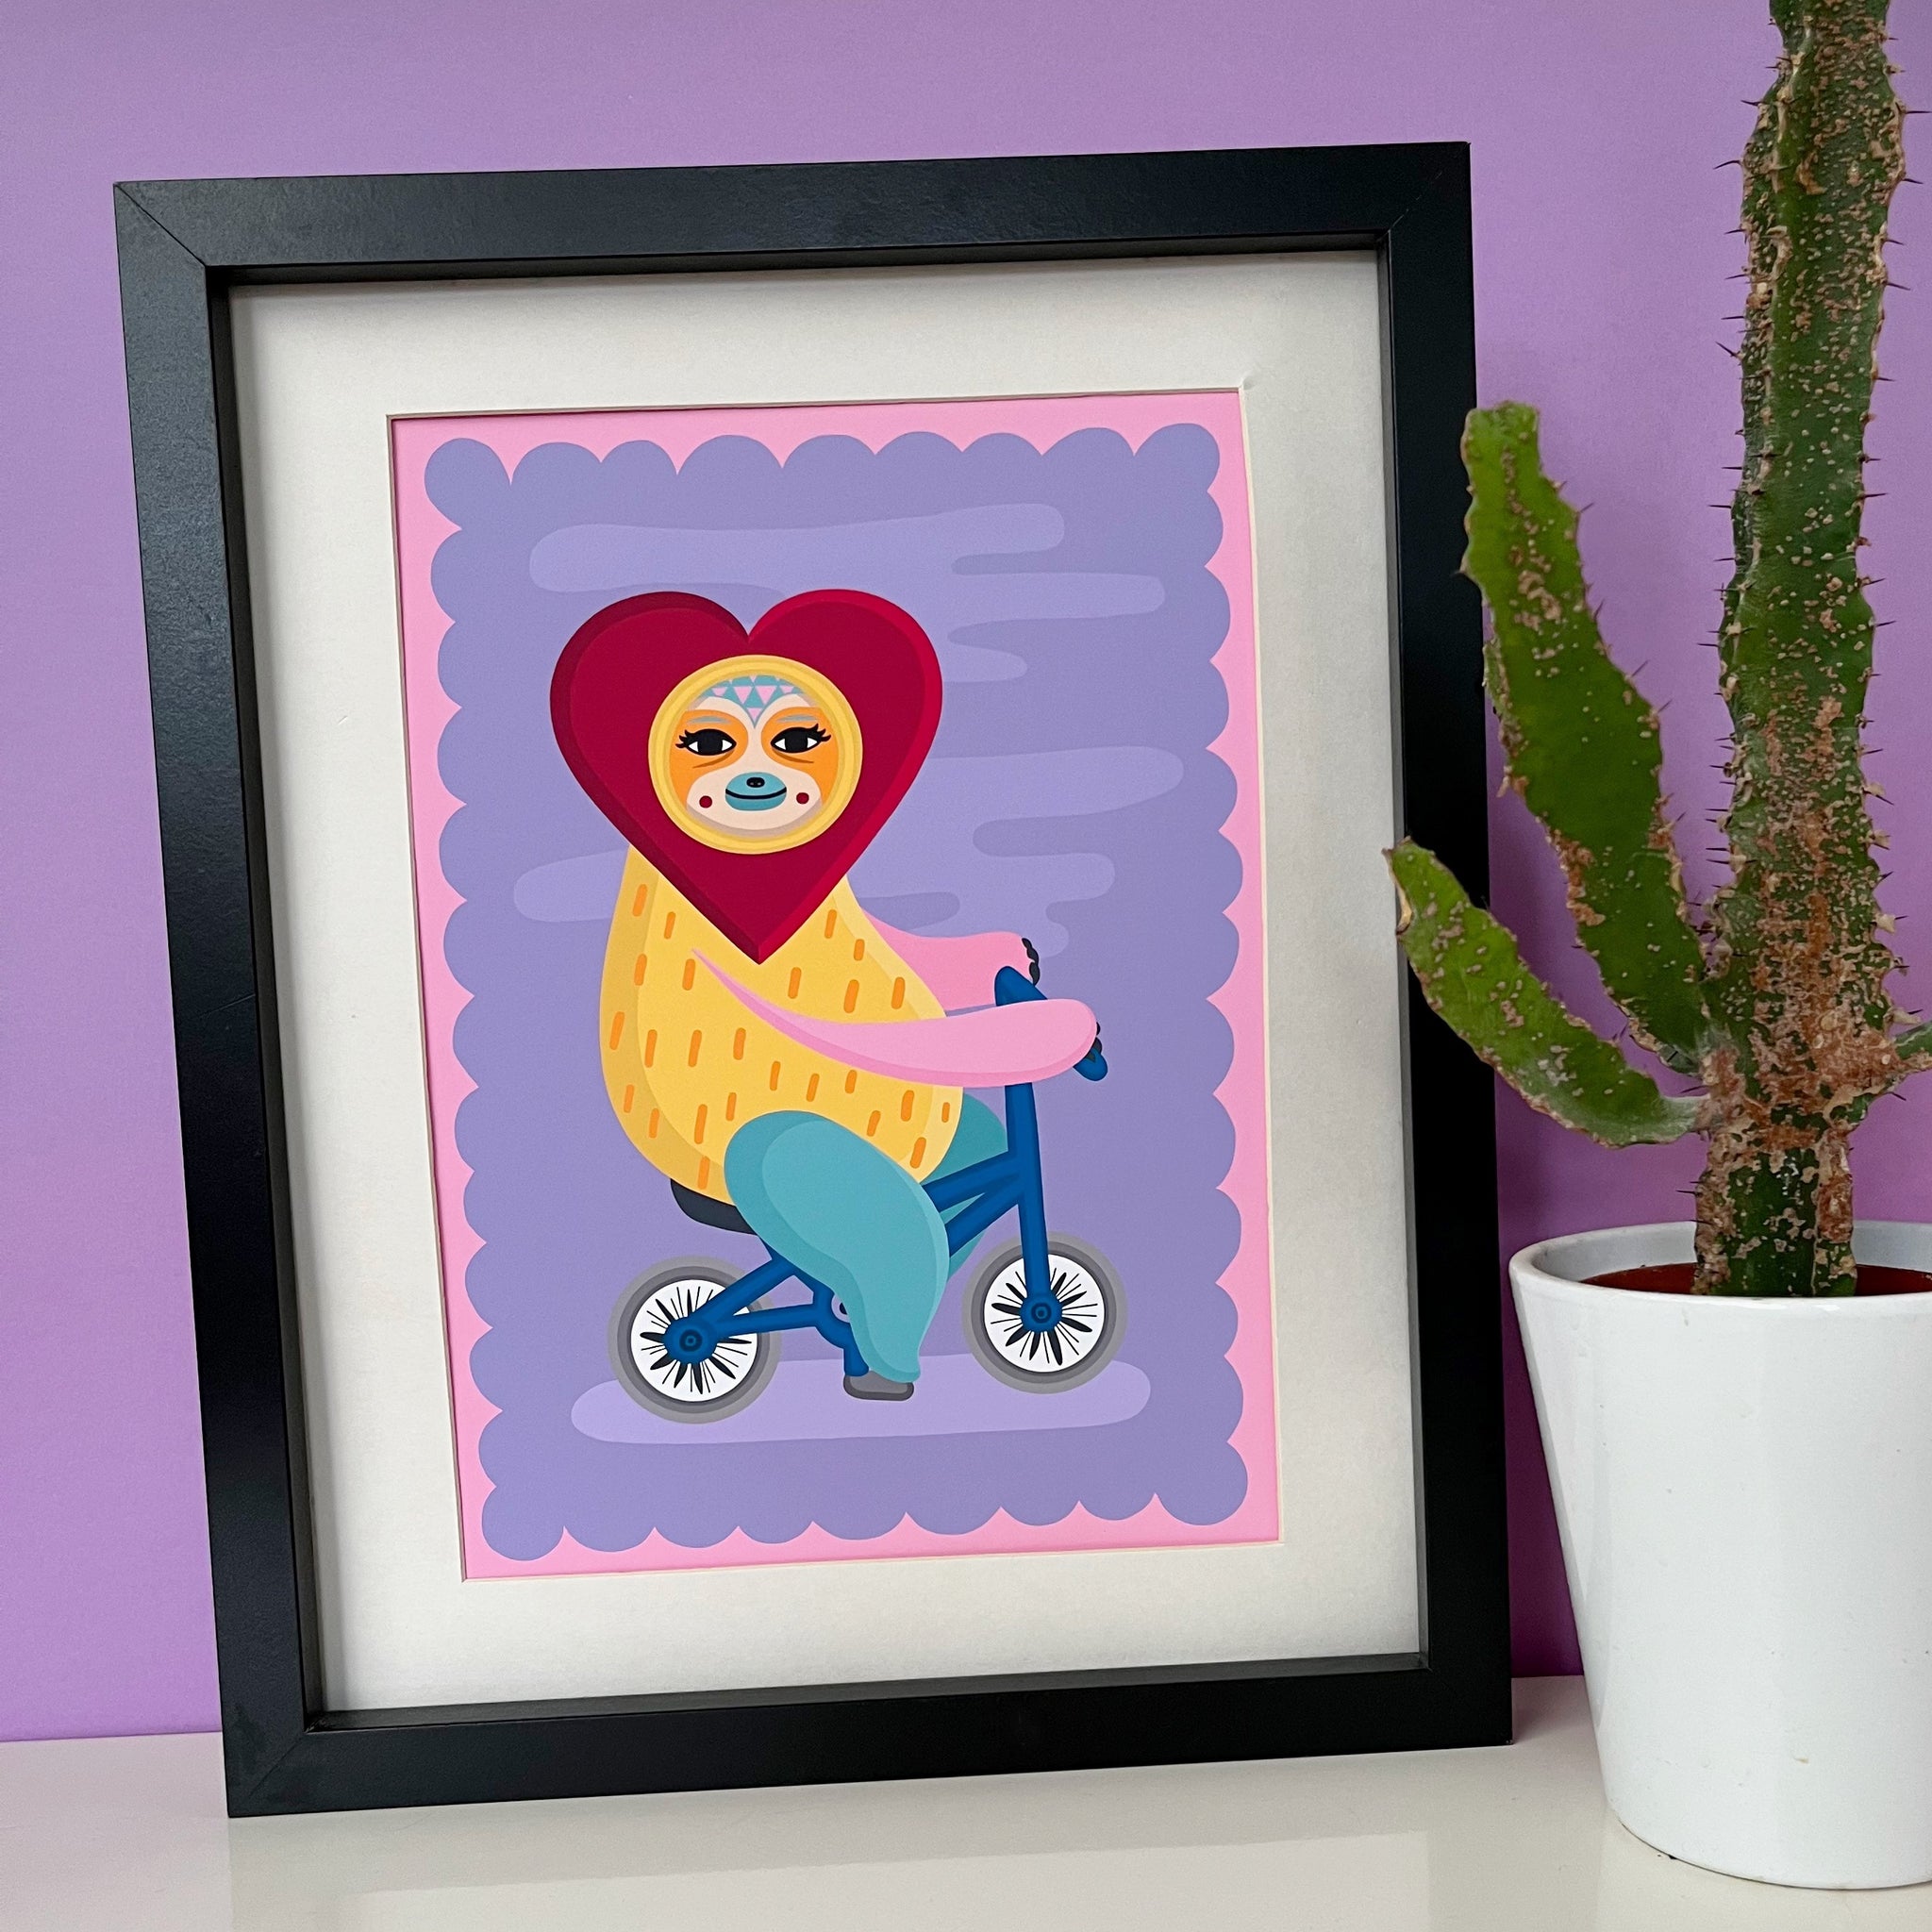 Bicycle Sloth Print